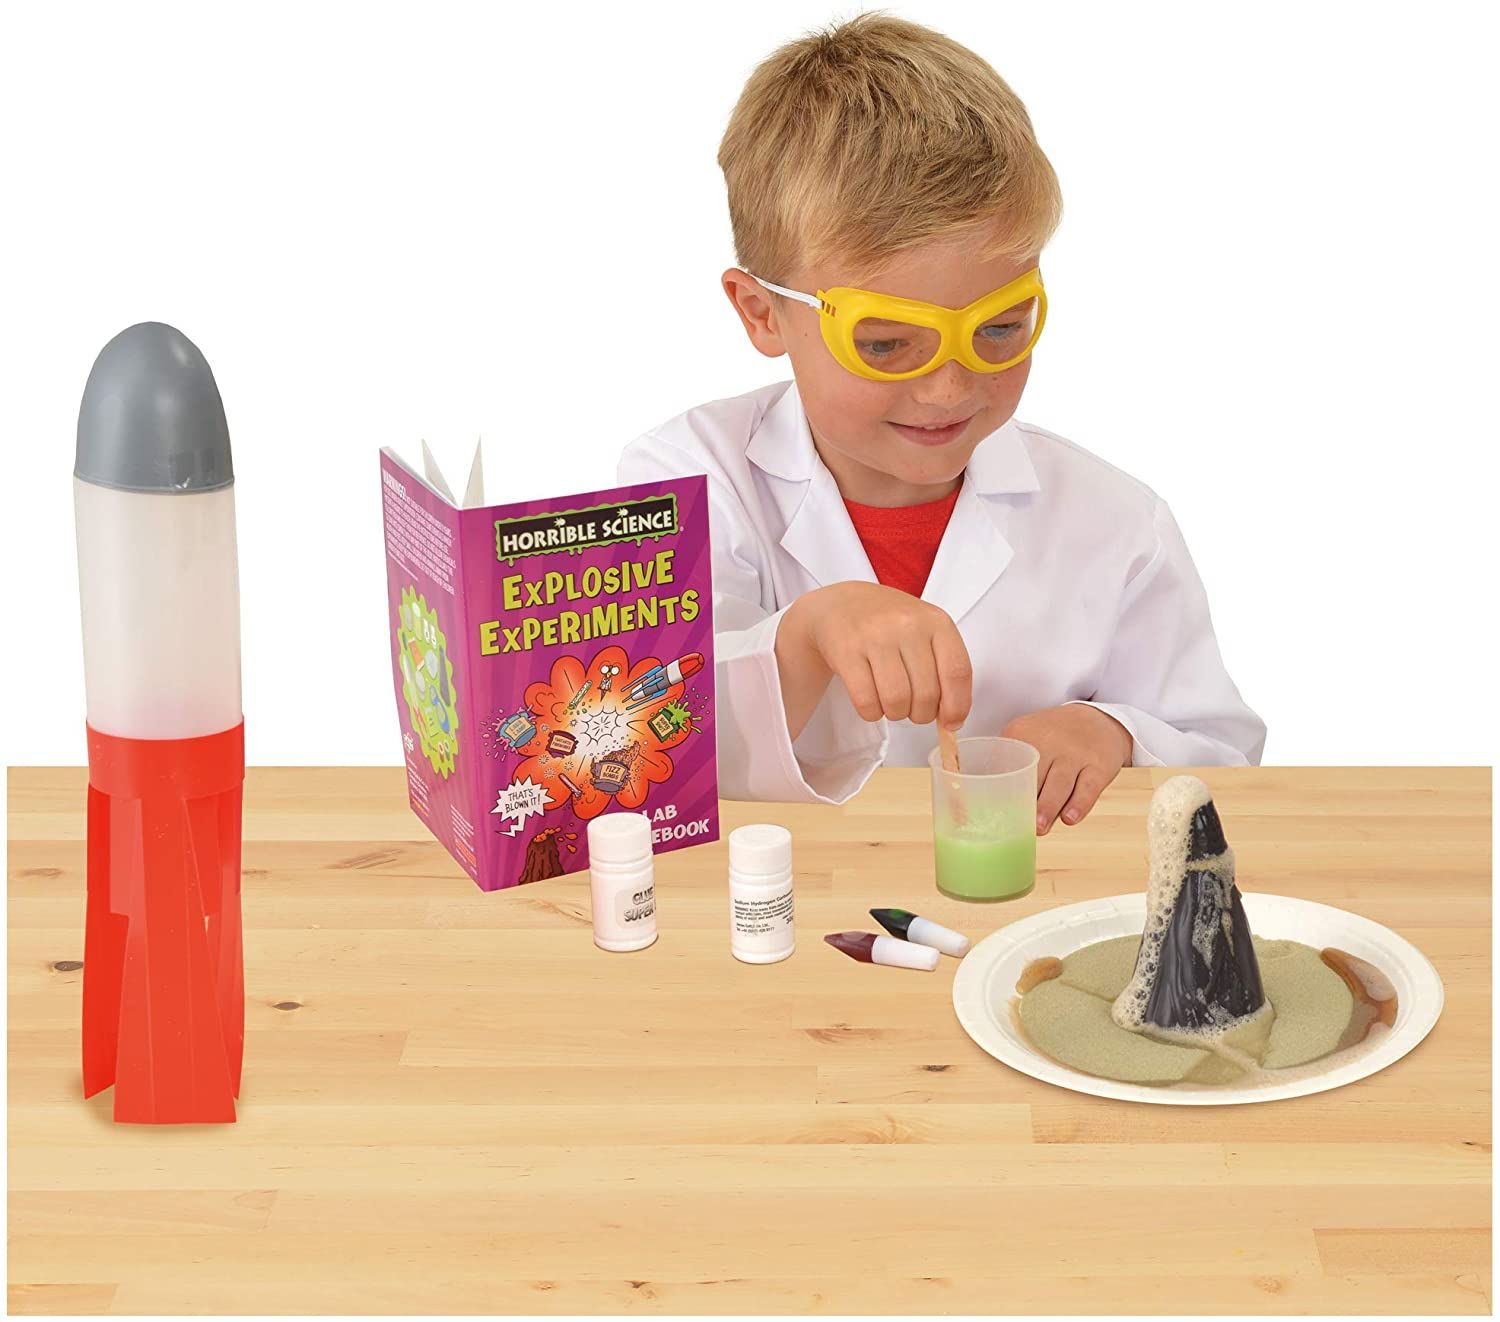 fun science kits for kids